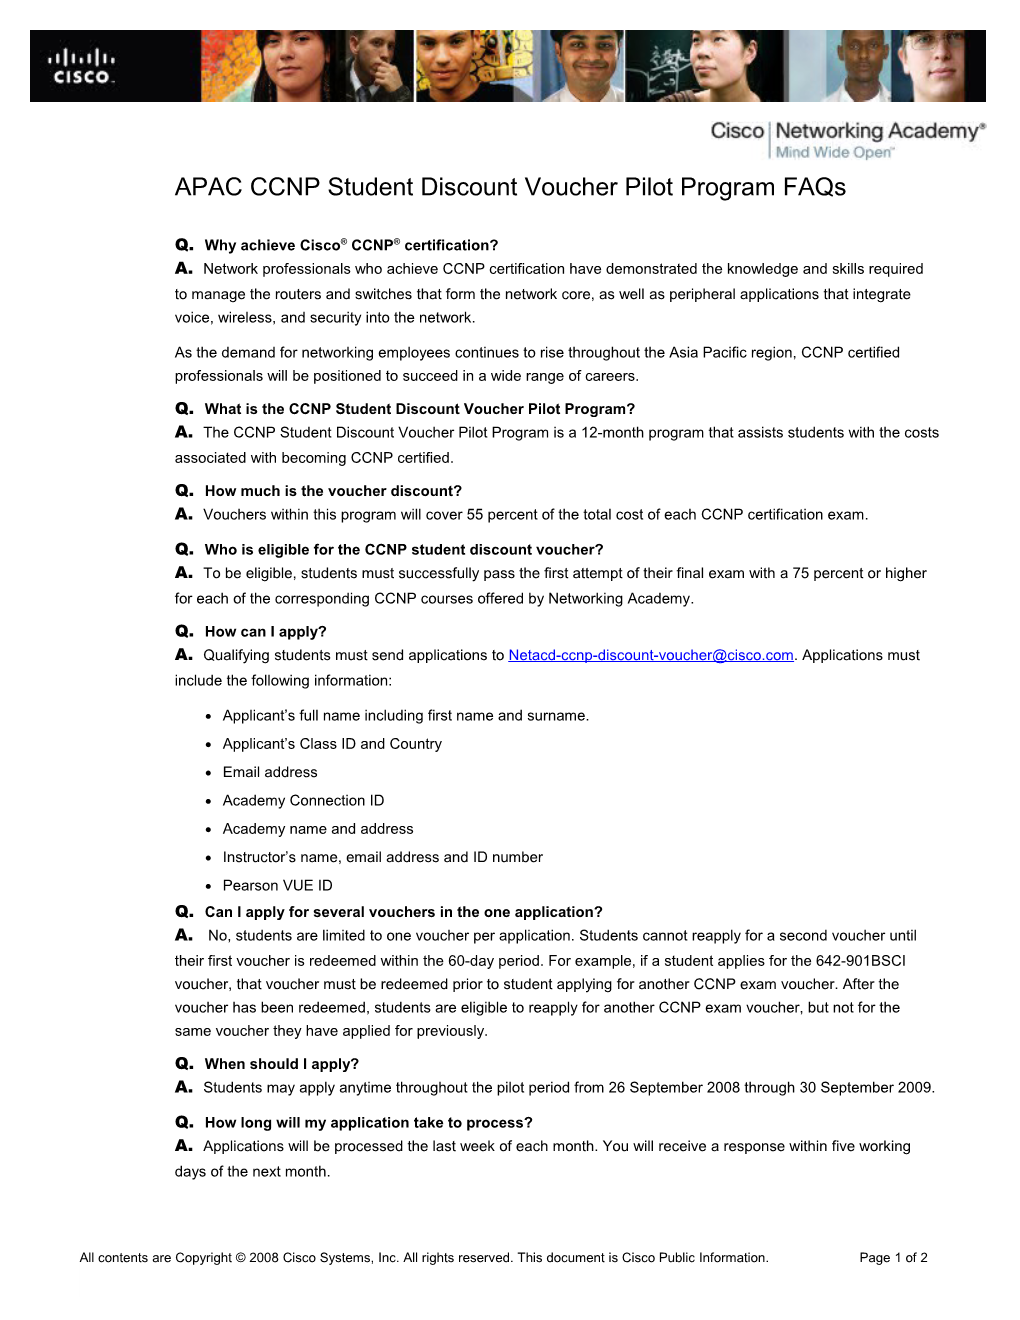 APAC CCNP Student Discount Voucherpilot Program Faqs